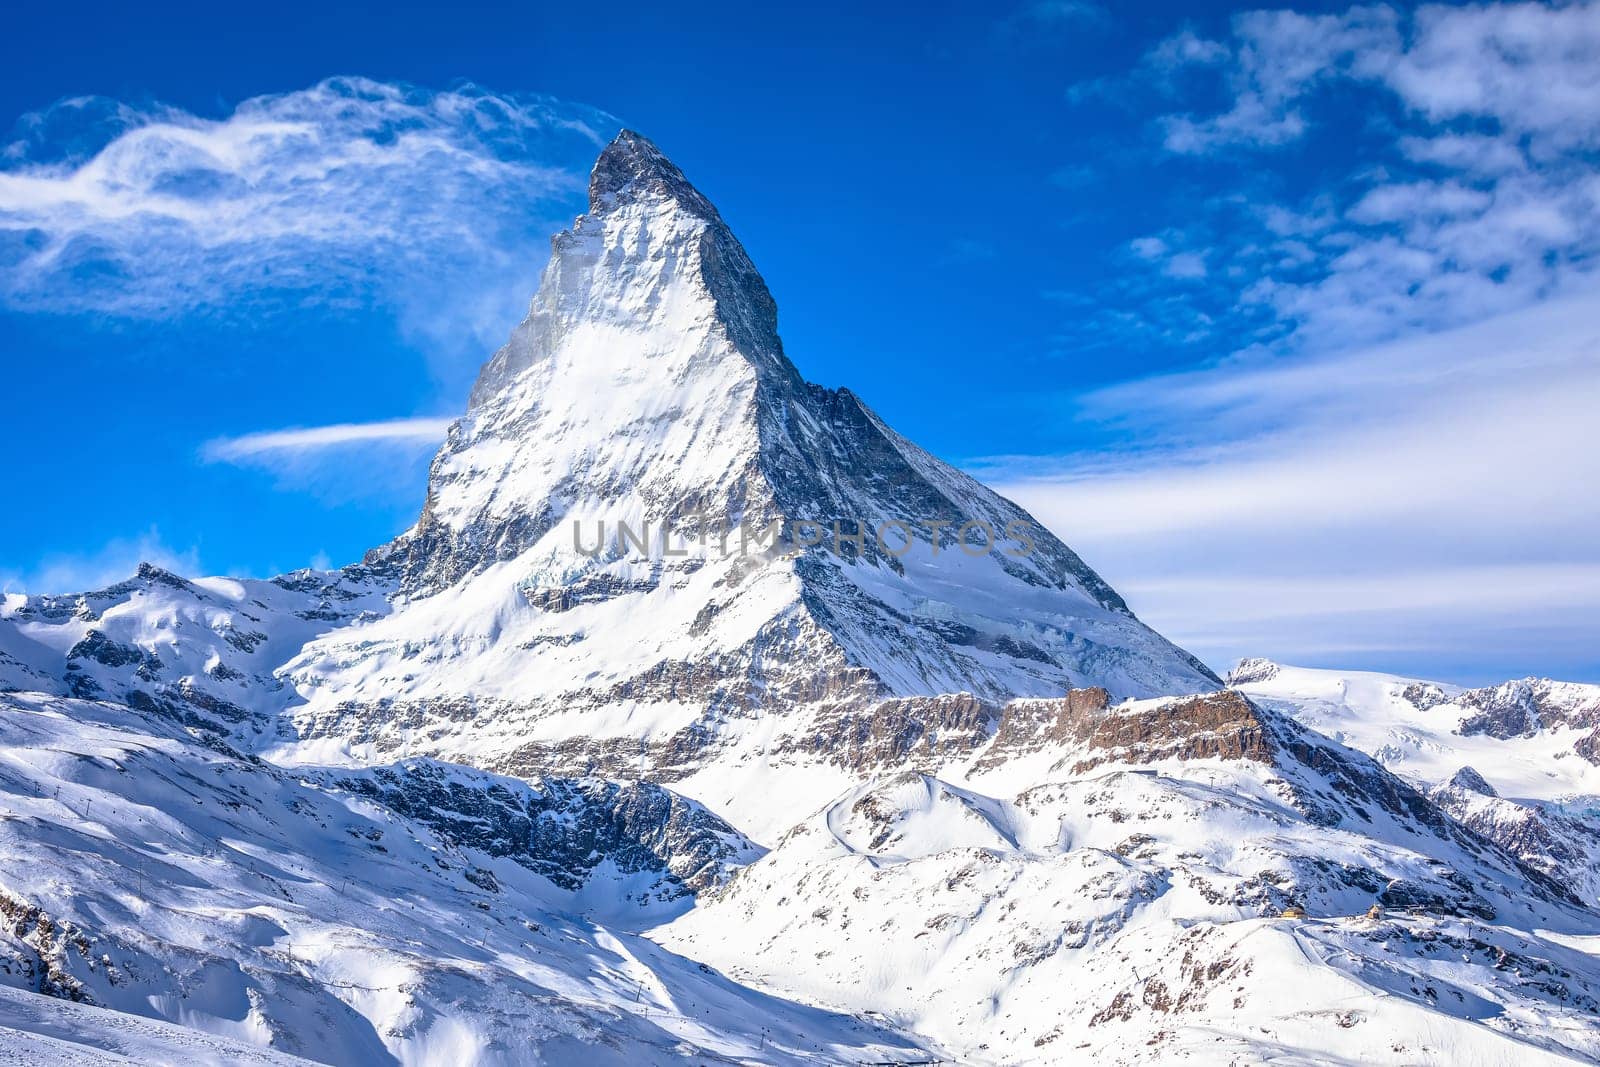 Scenic Matterhorn peak ridge in Zermatt, Valais region in Switzerland Alps